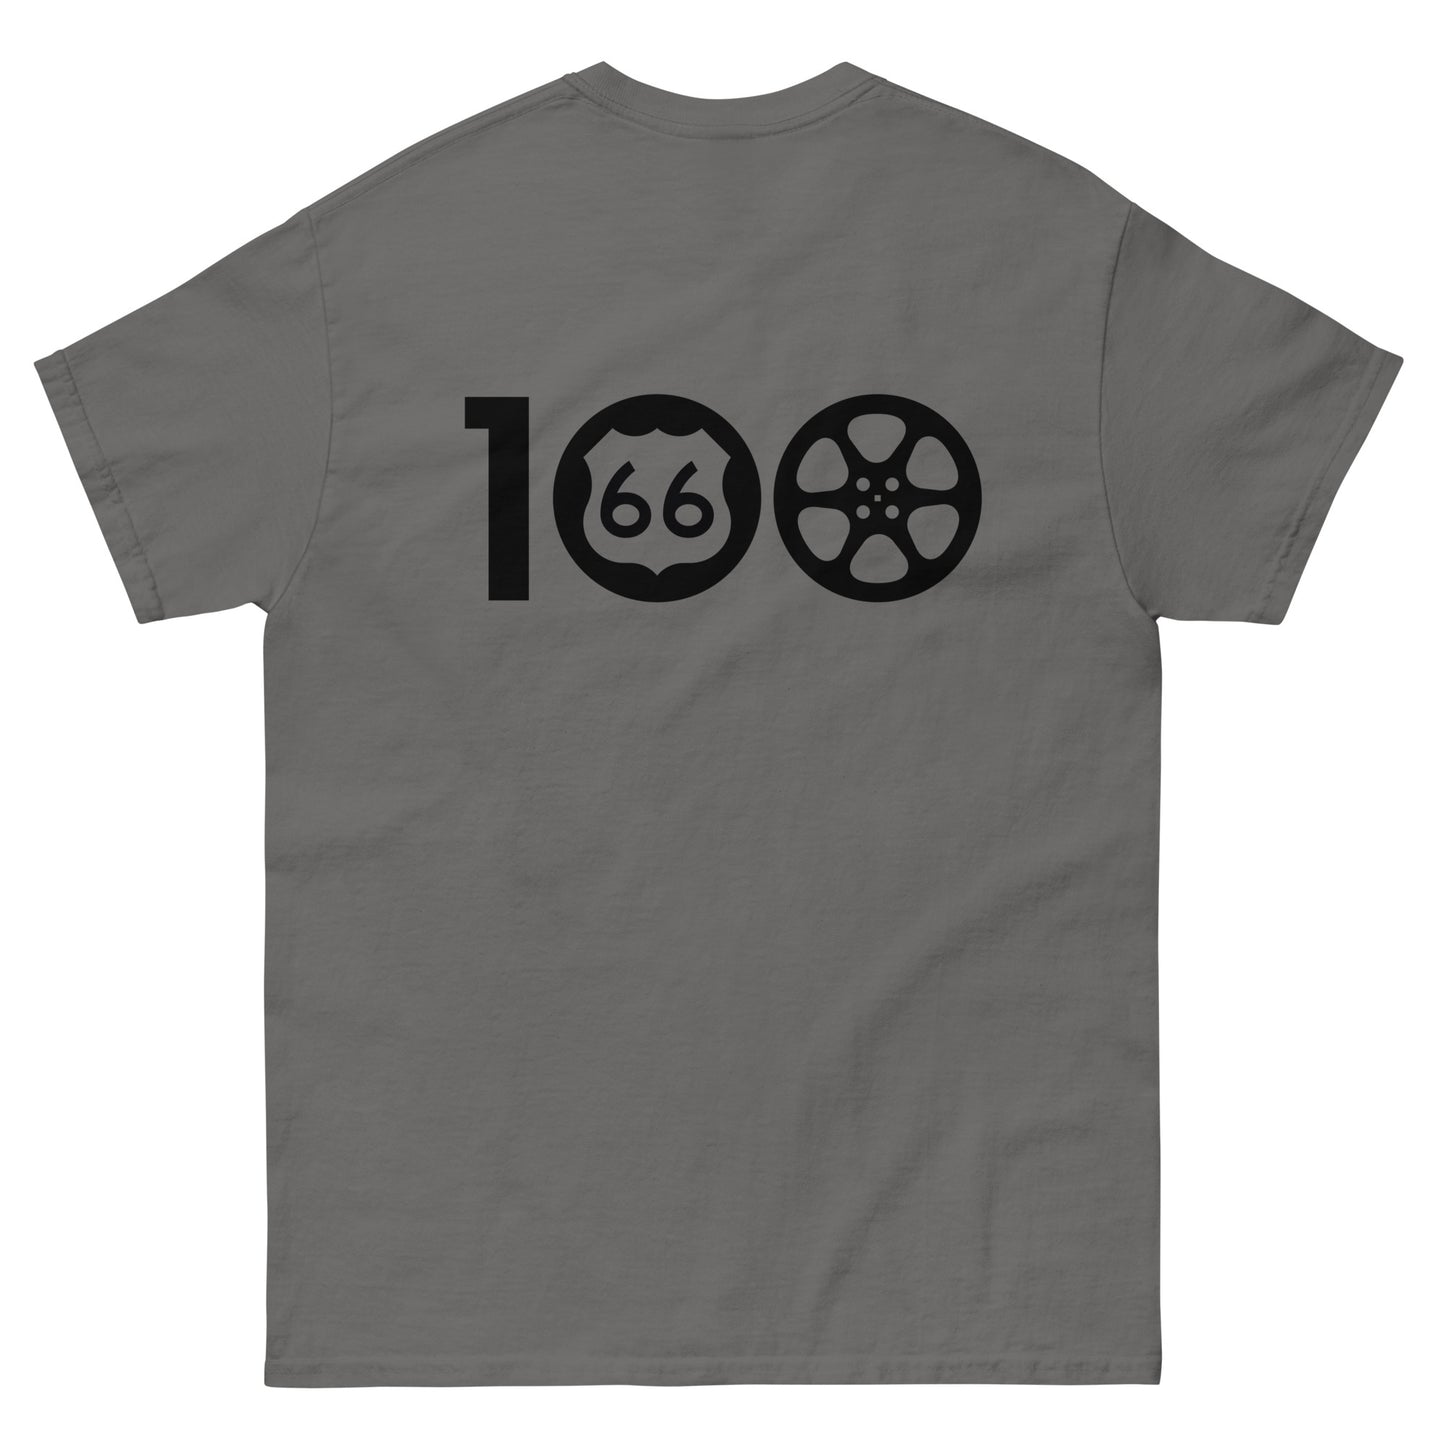 Route 66 Film Crew Shirt - Gray - Men's classic tee